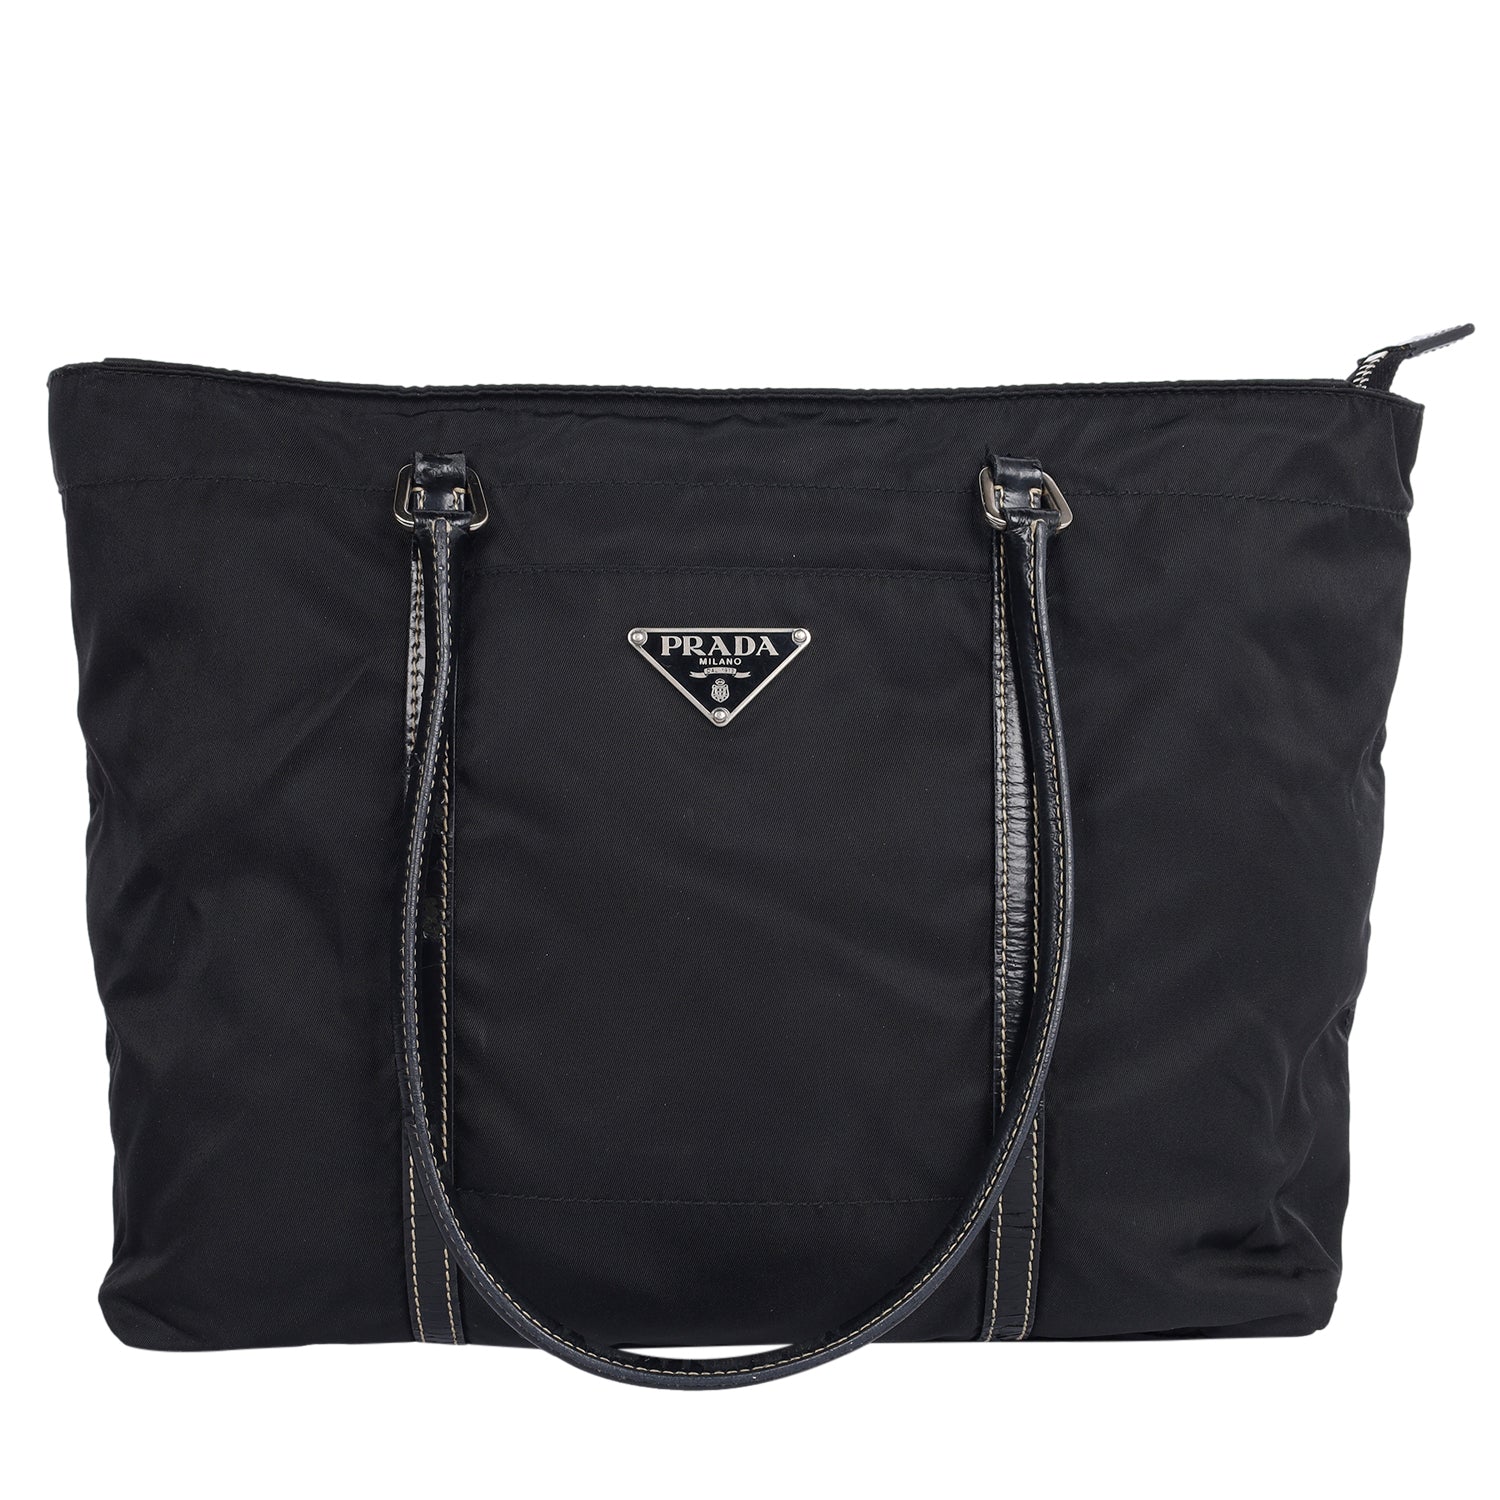 Prada Turquoise Leather Pattina Shoulder Bag Prada | The Luxury Closet